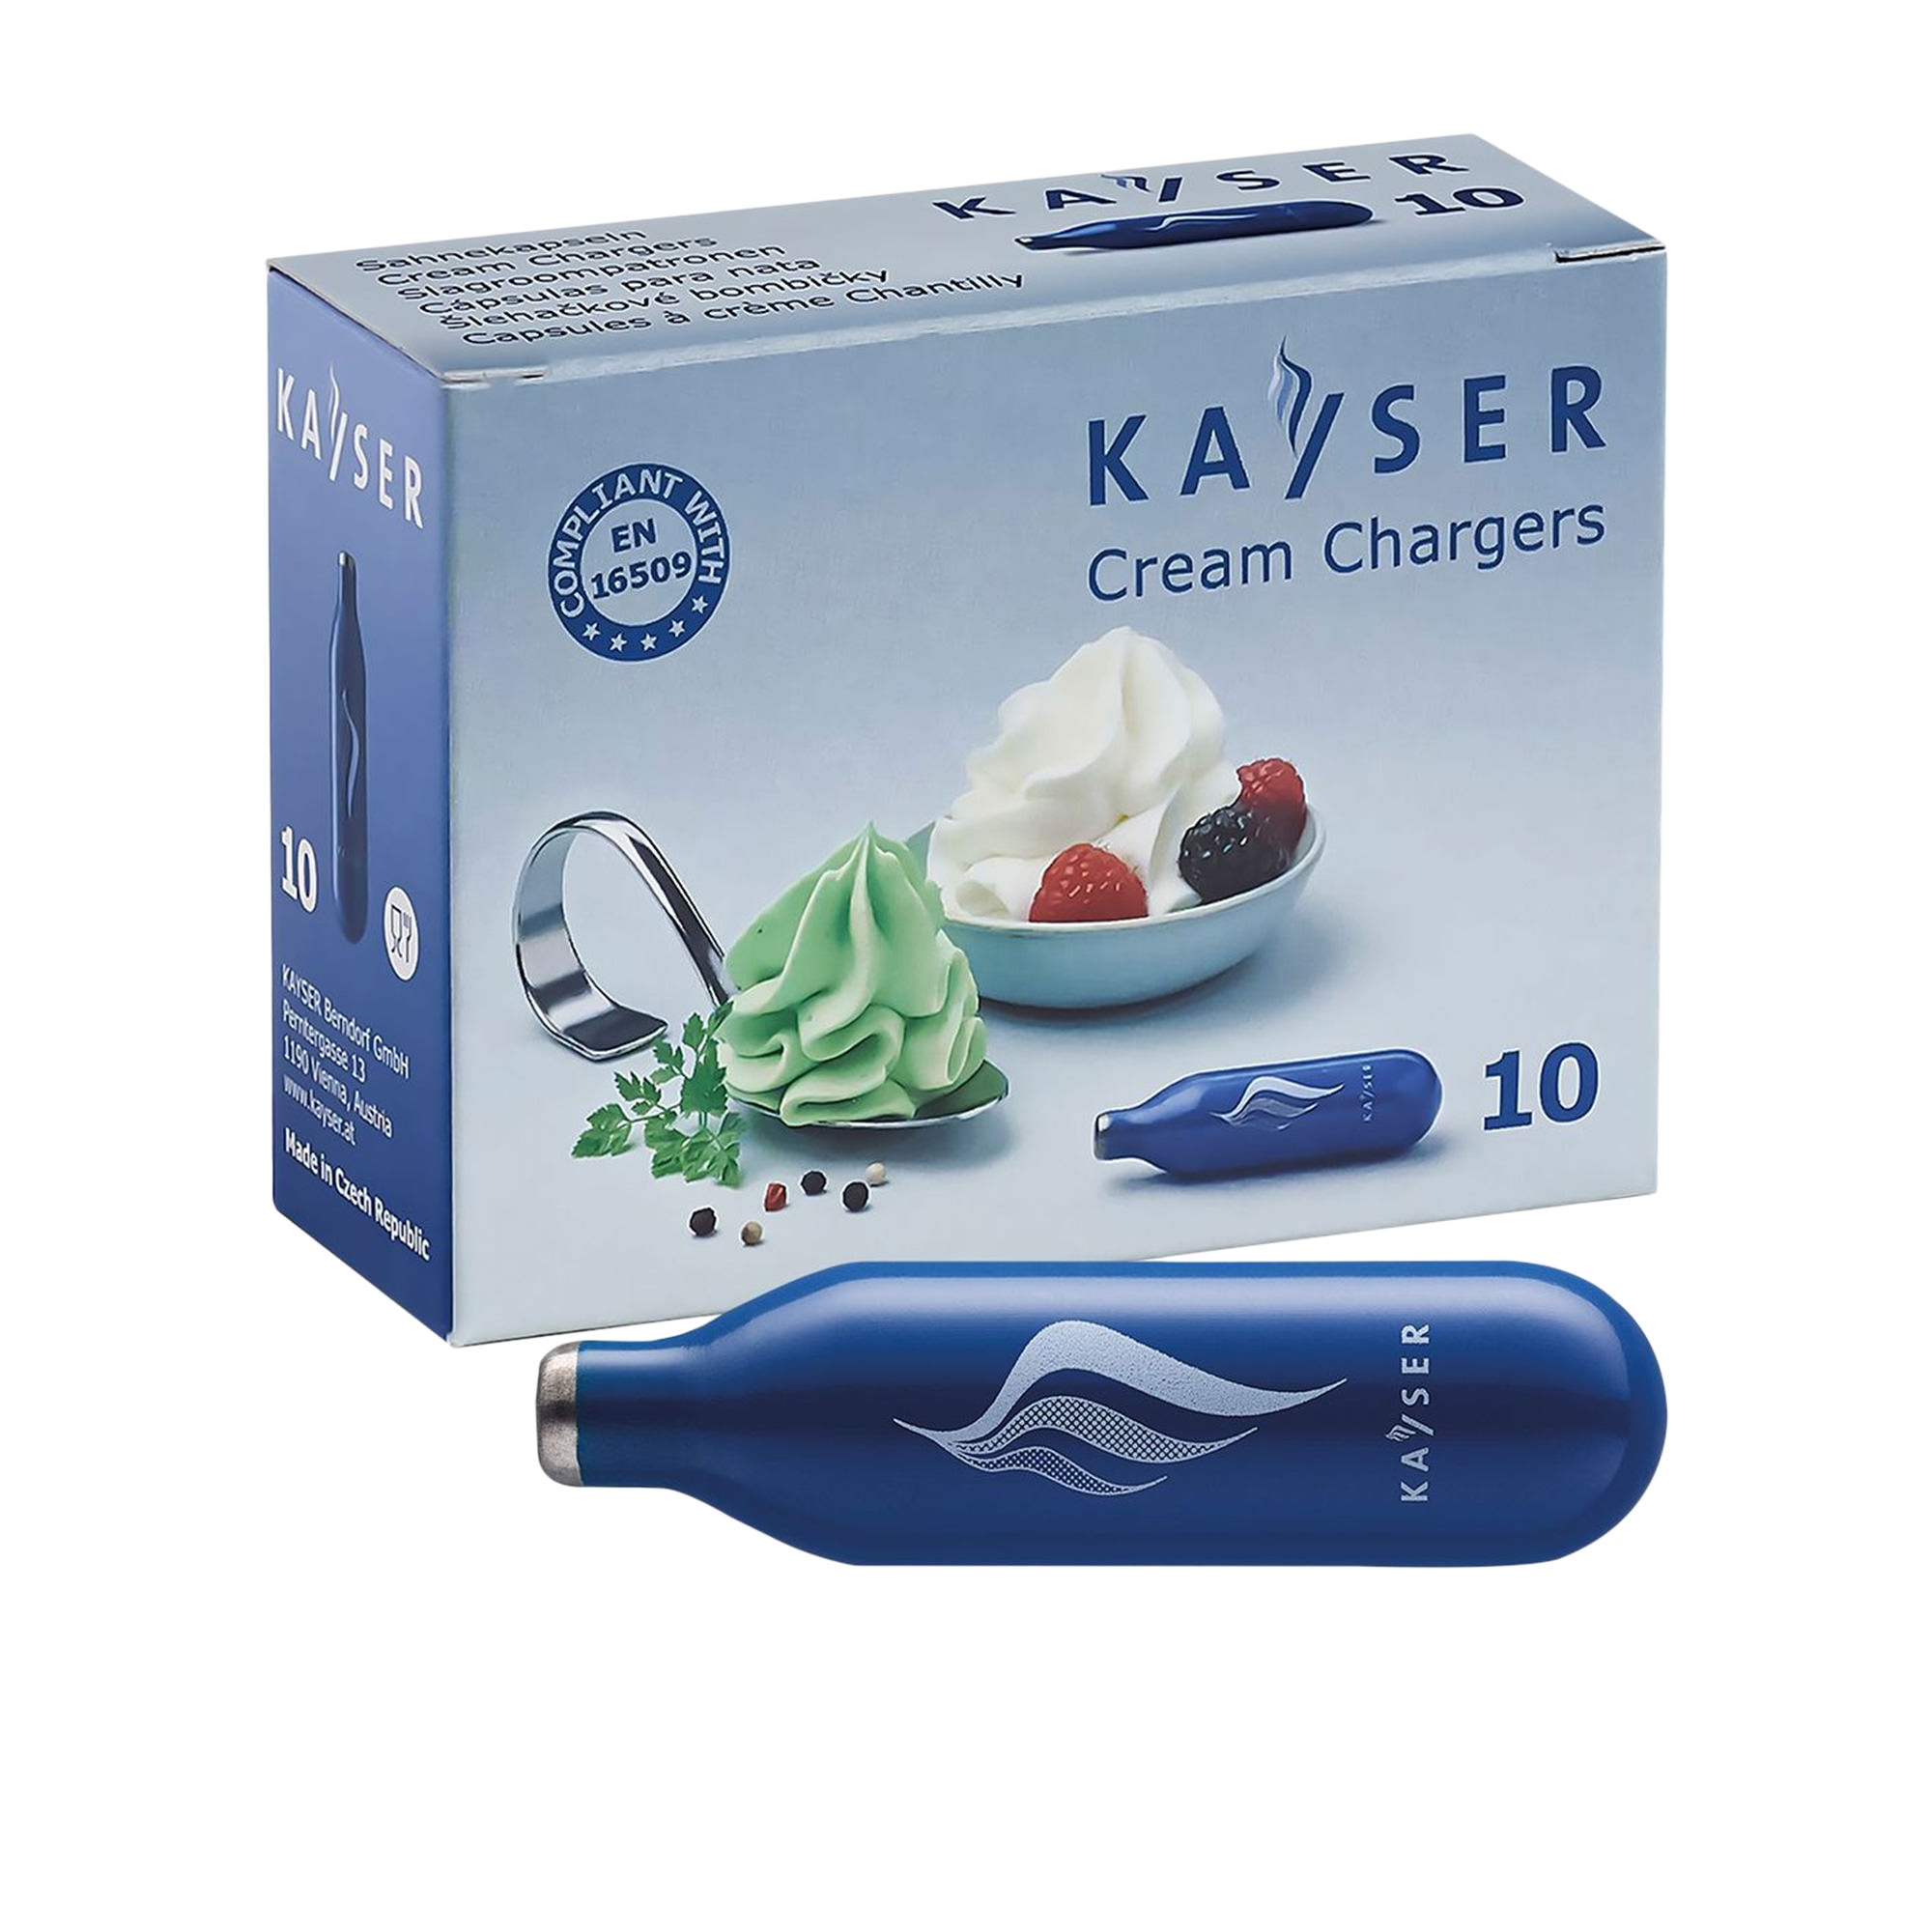 Kayser Creamer Charger Bulbs Set of 10 Blue Image 1